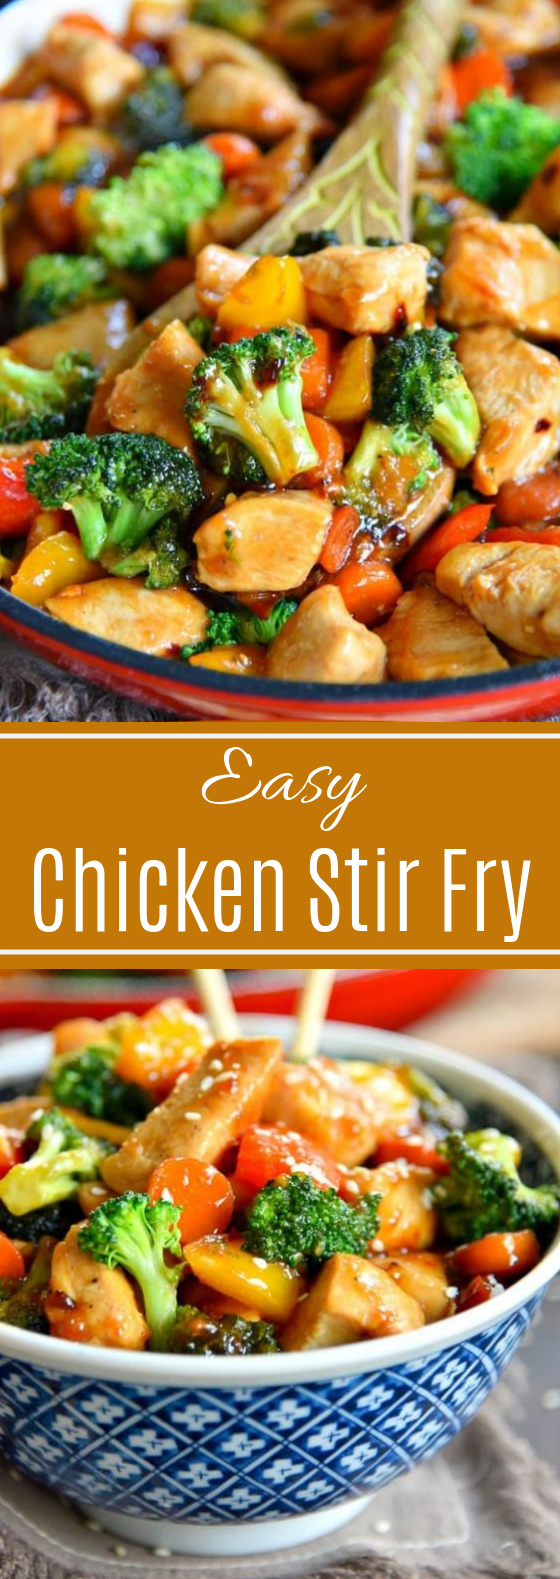 Easy Chicken Stir Fry #healthydinner #keto